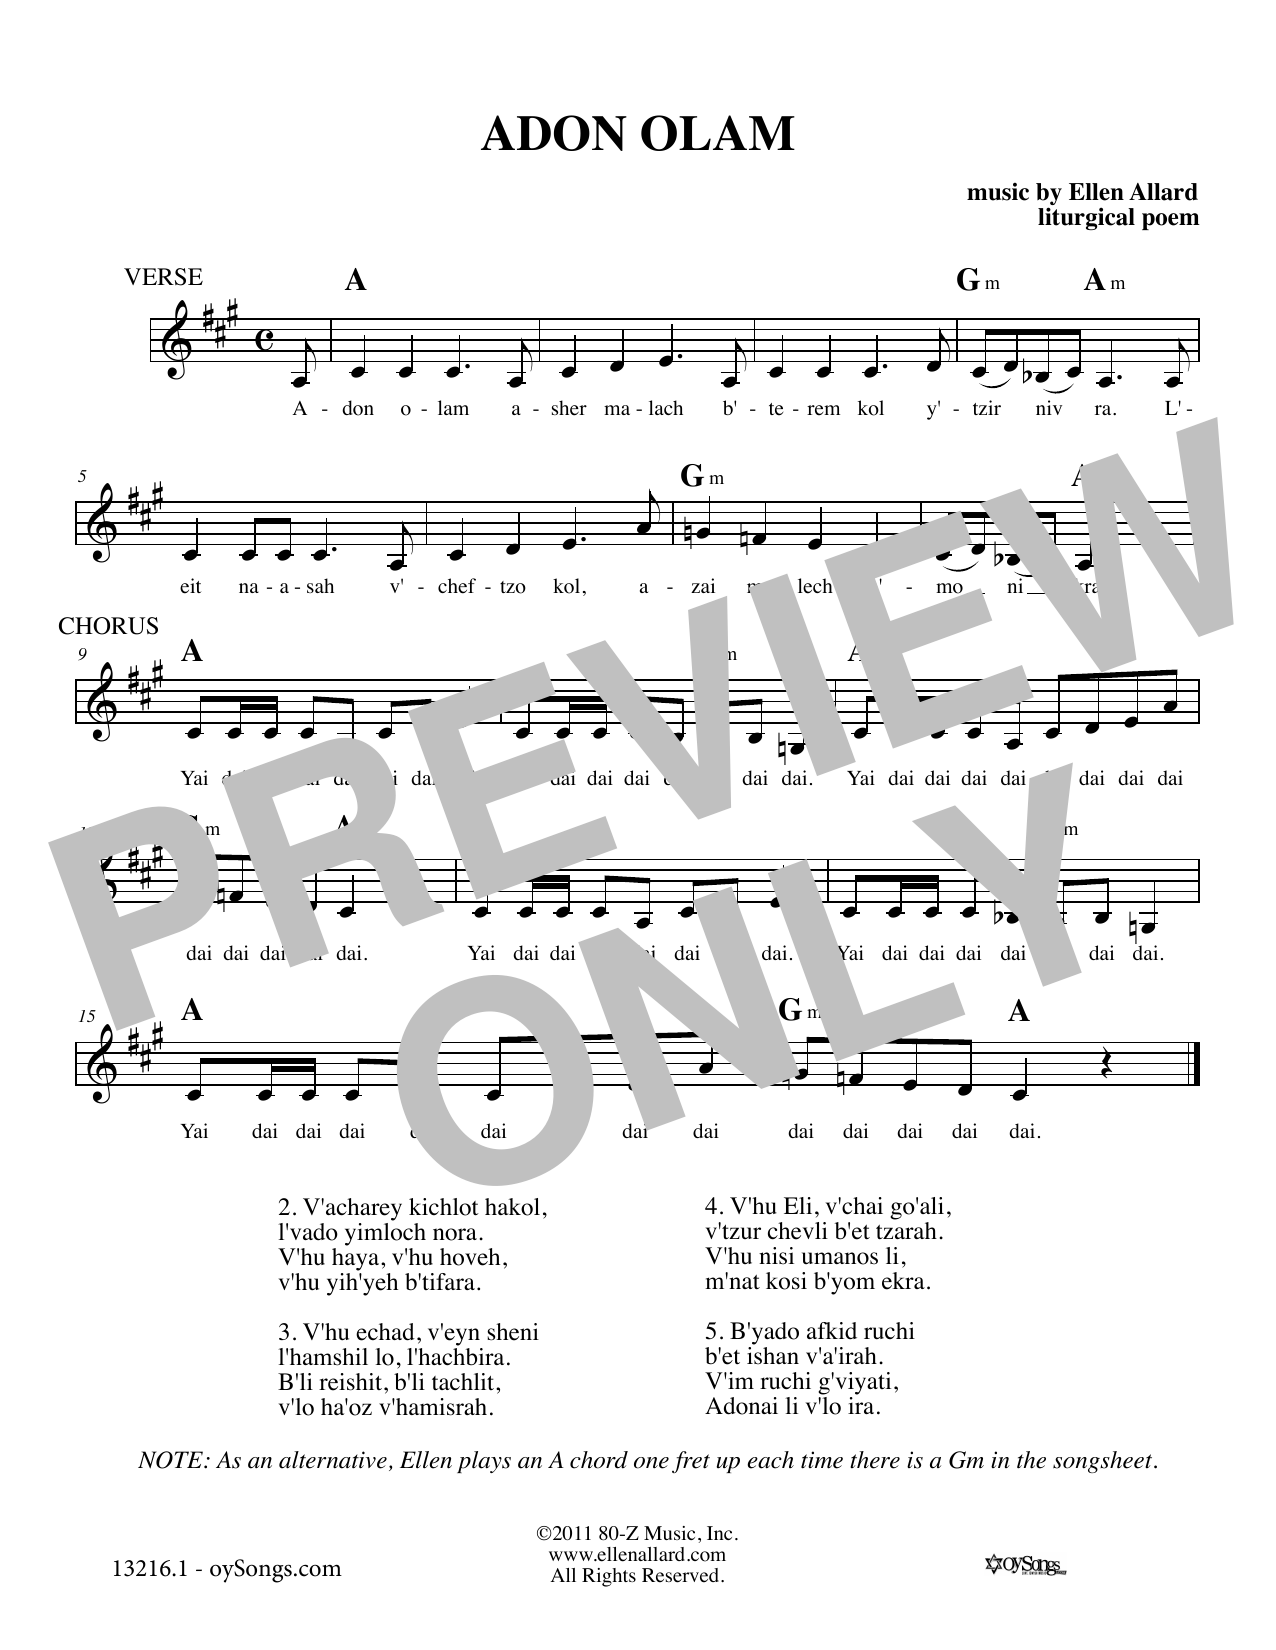 Ellen Allard Adon Olam Sheet Music Notes & Chords for Melody Line, Lyrics & Chords - Download or Print PDF